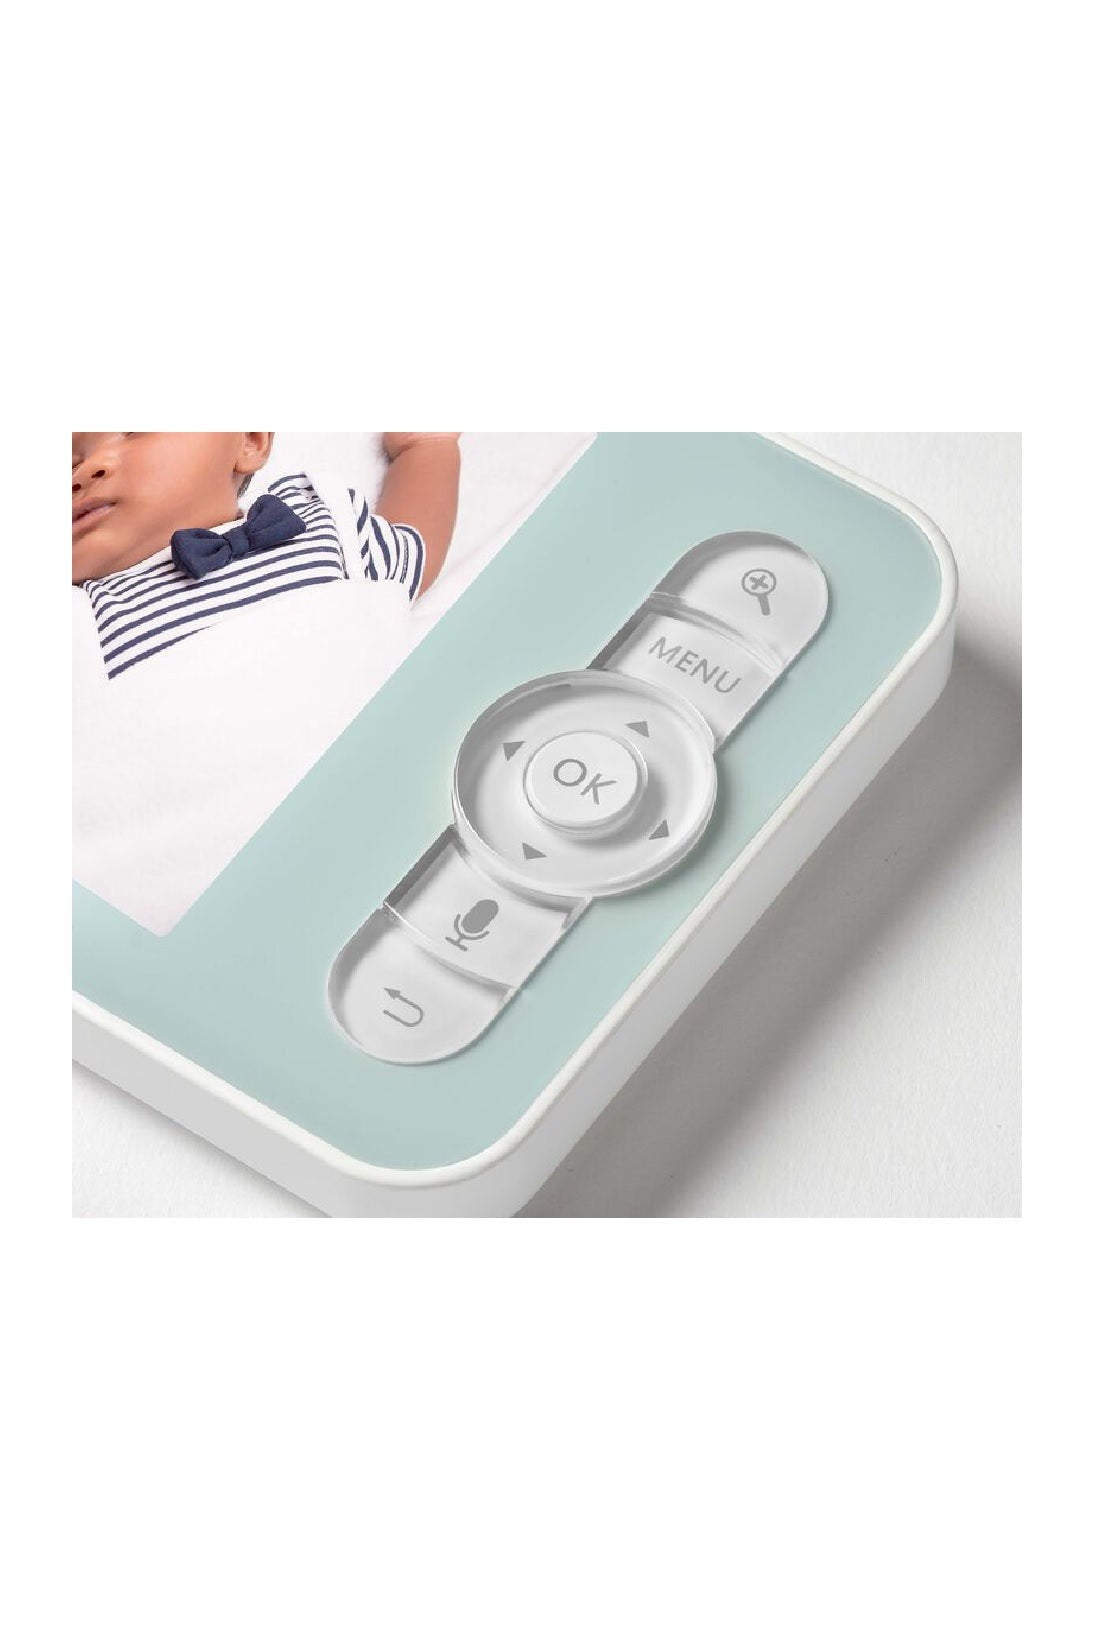 Beaba Zen Premium Smart Baby Video Monitor (930331)